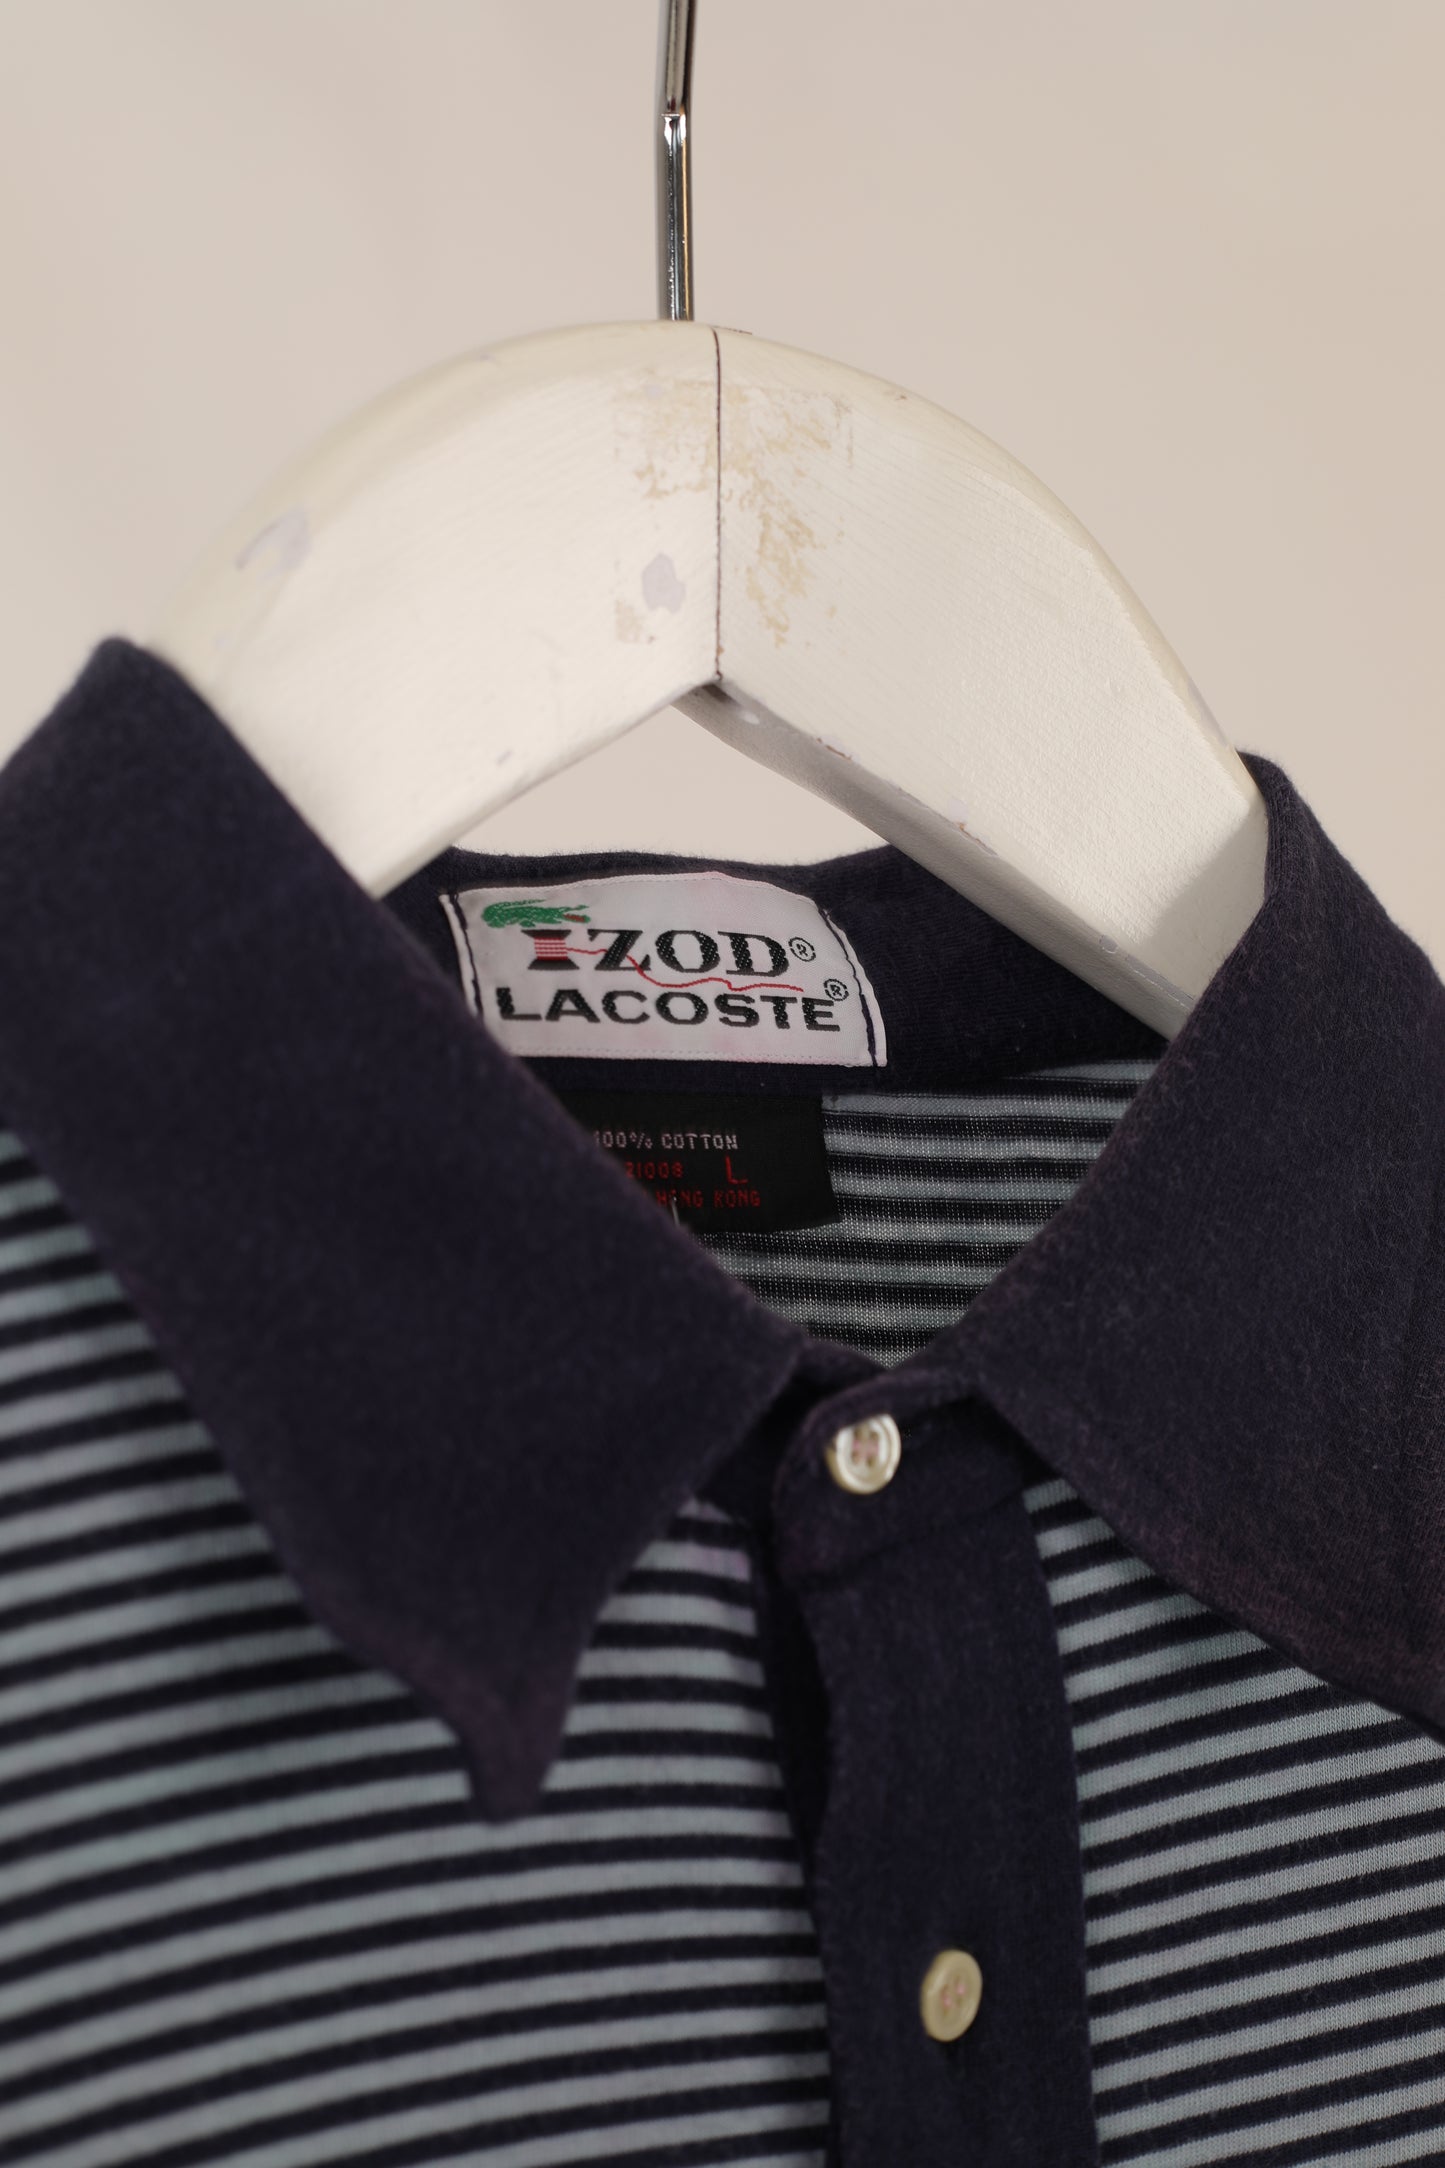 Izod Lacoste stripe polo shirt